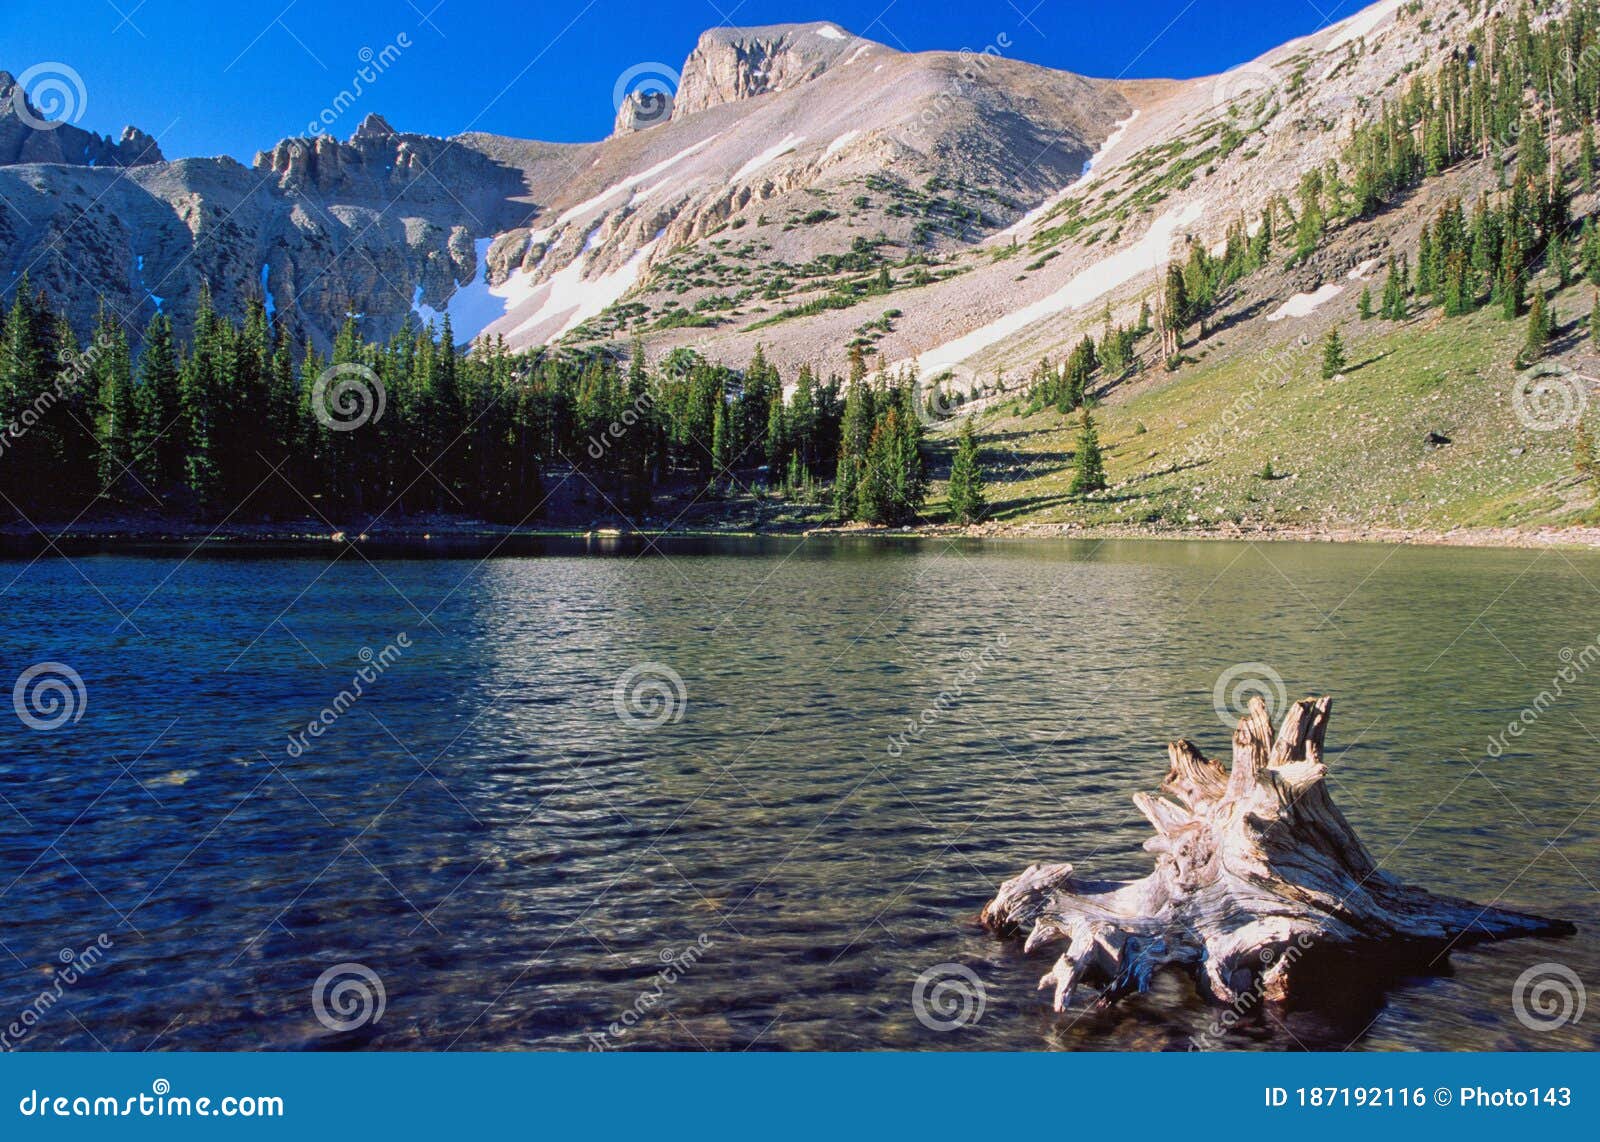 stella lake and driftwood, great basin national park